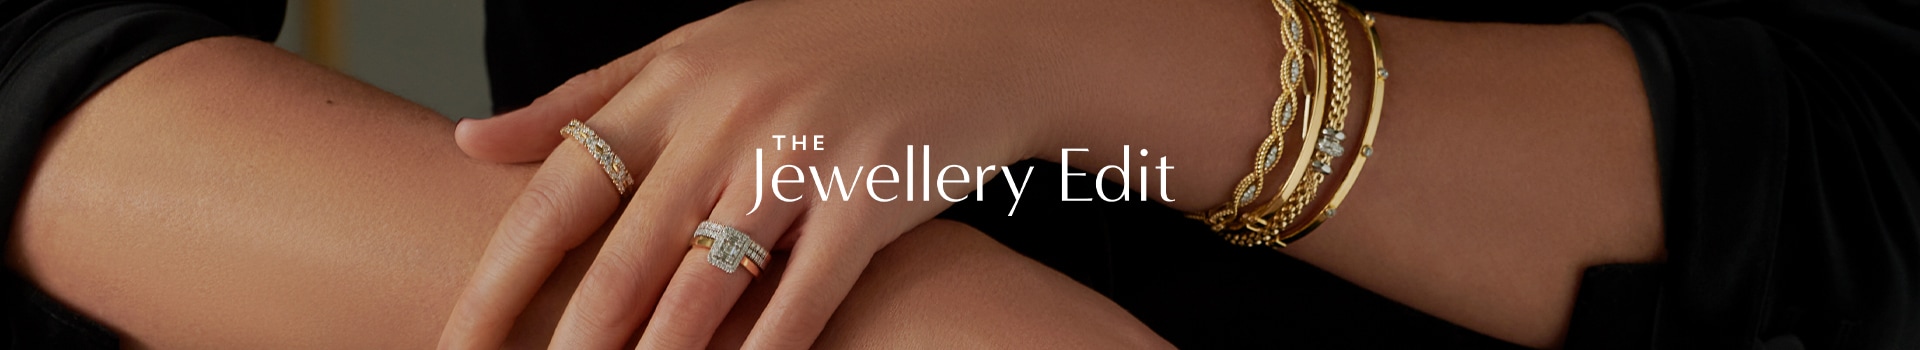 The Jewellery Edit